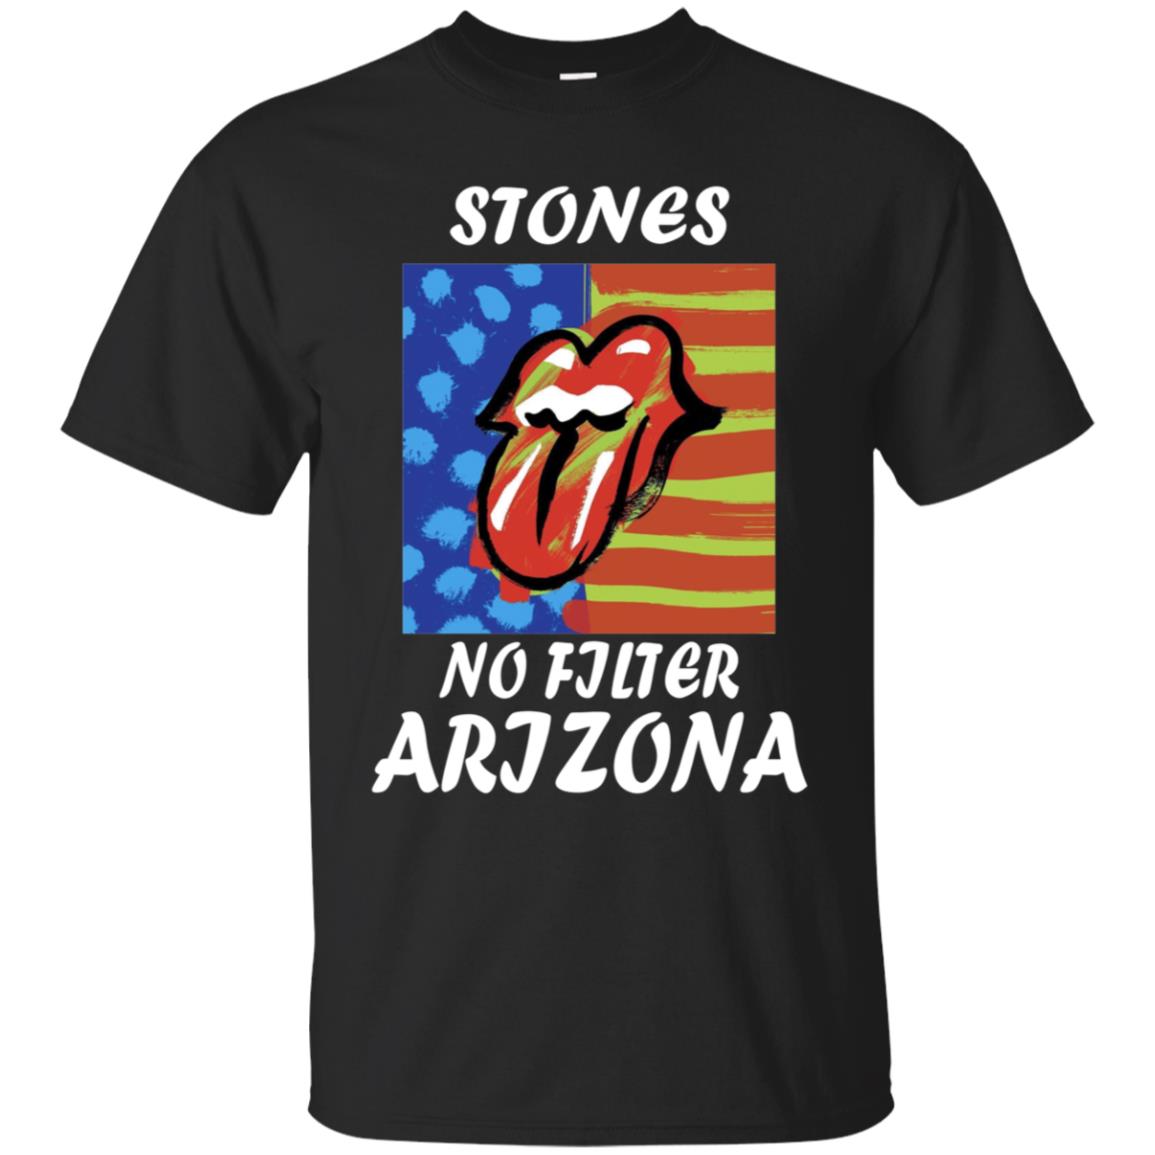 Stones No Filter Arizona Shirts